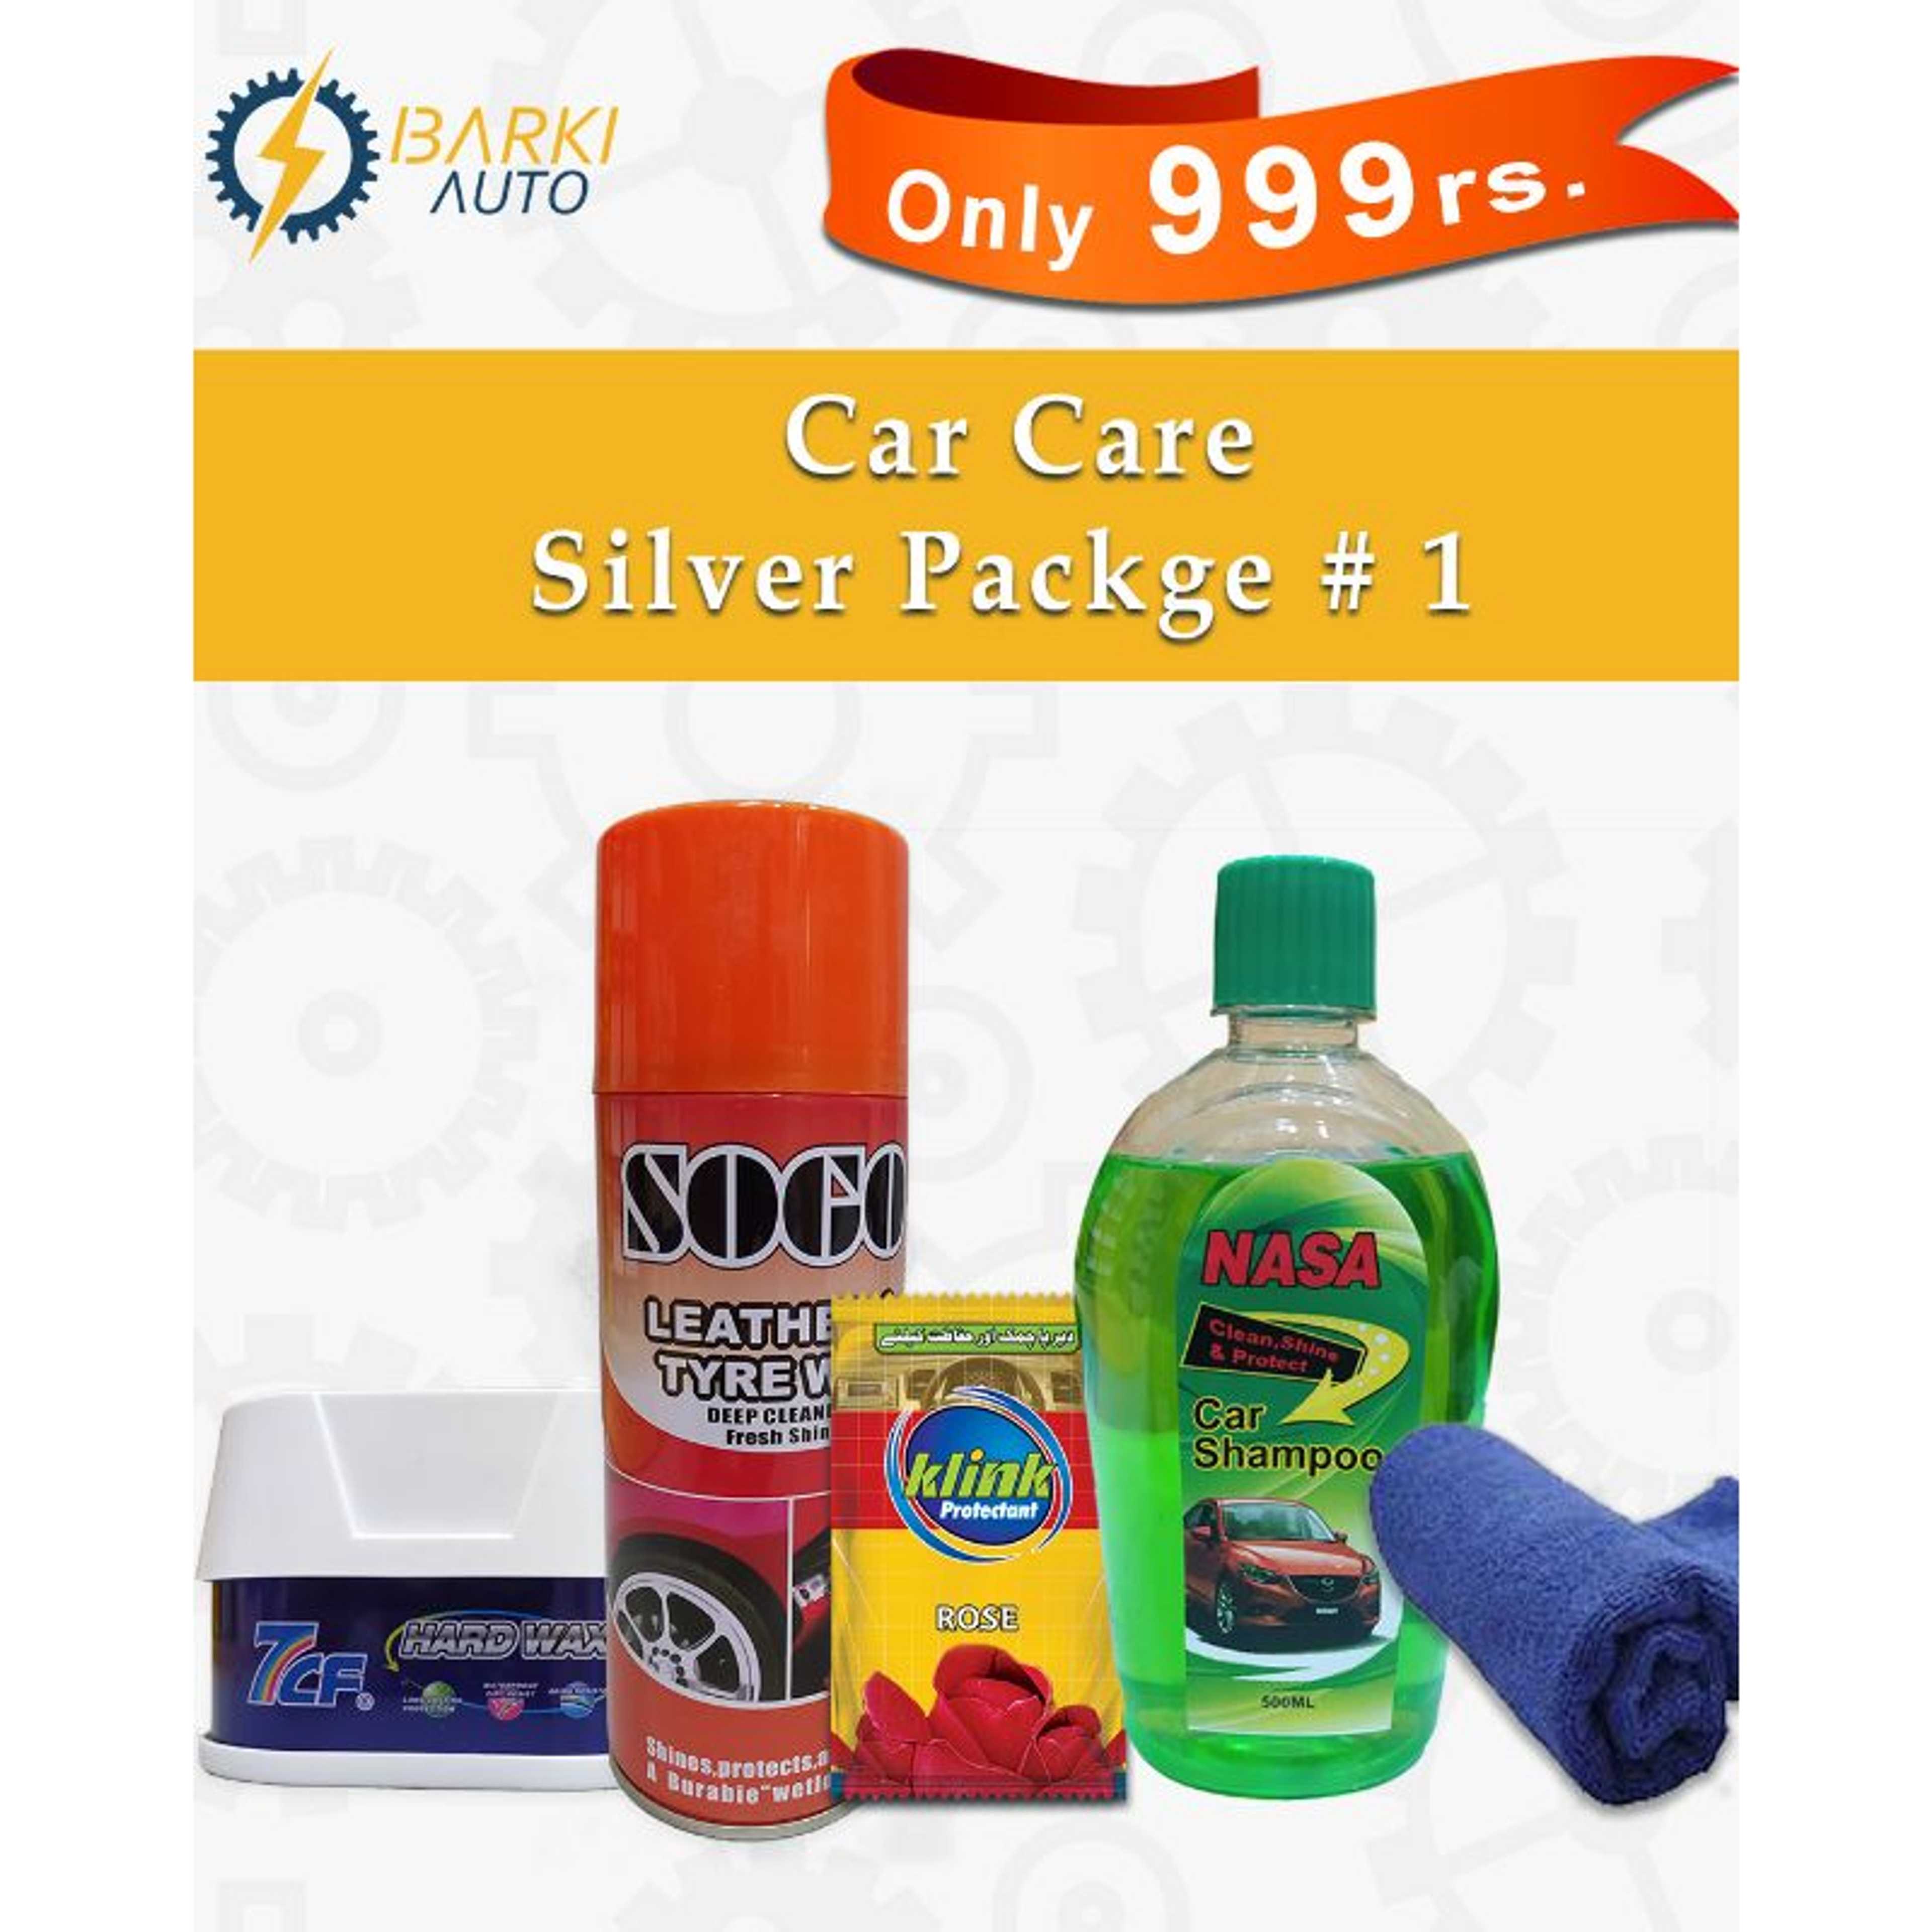 7CF Hard Wax , Car shampoo Nasa, Klink protectant | Sogo leather and tyre | microfiber cleaner